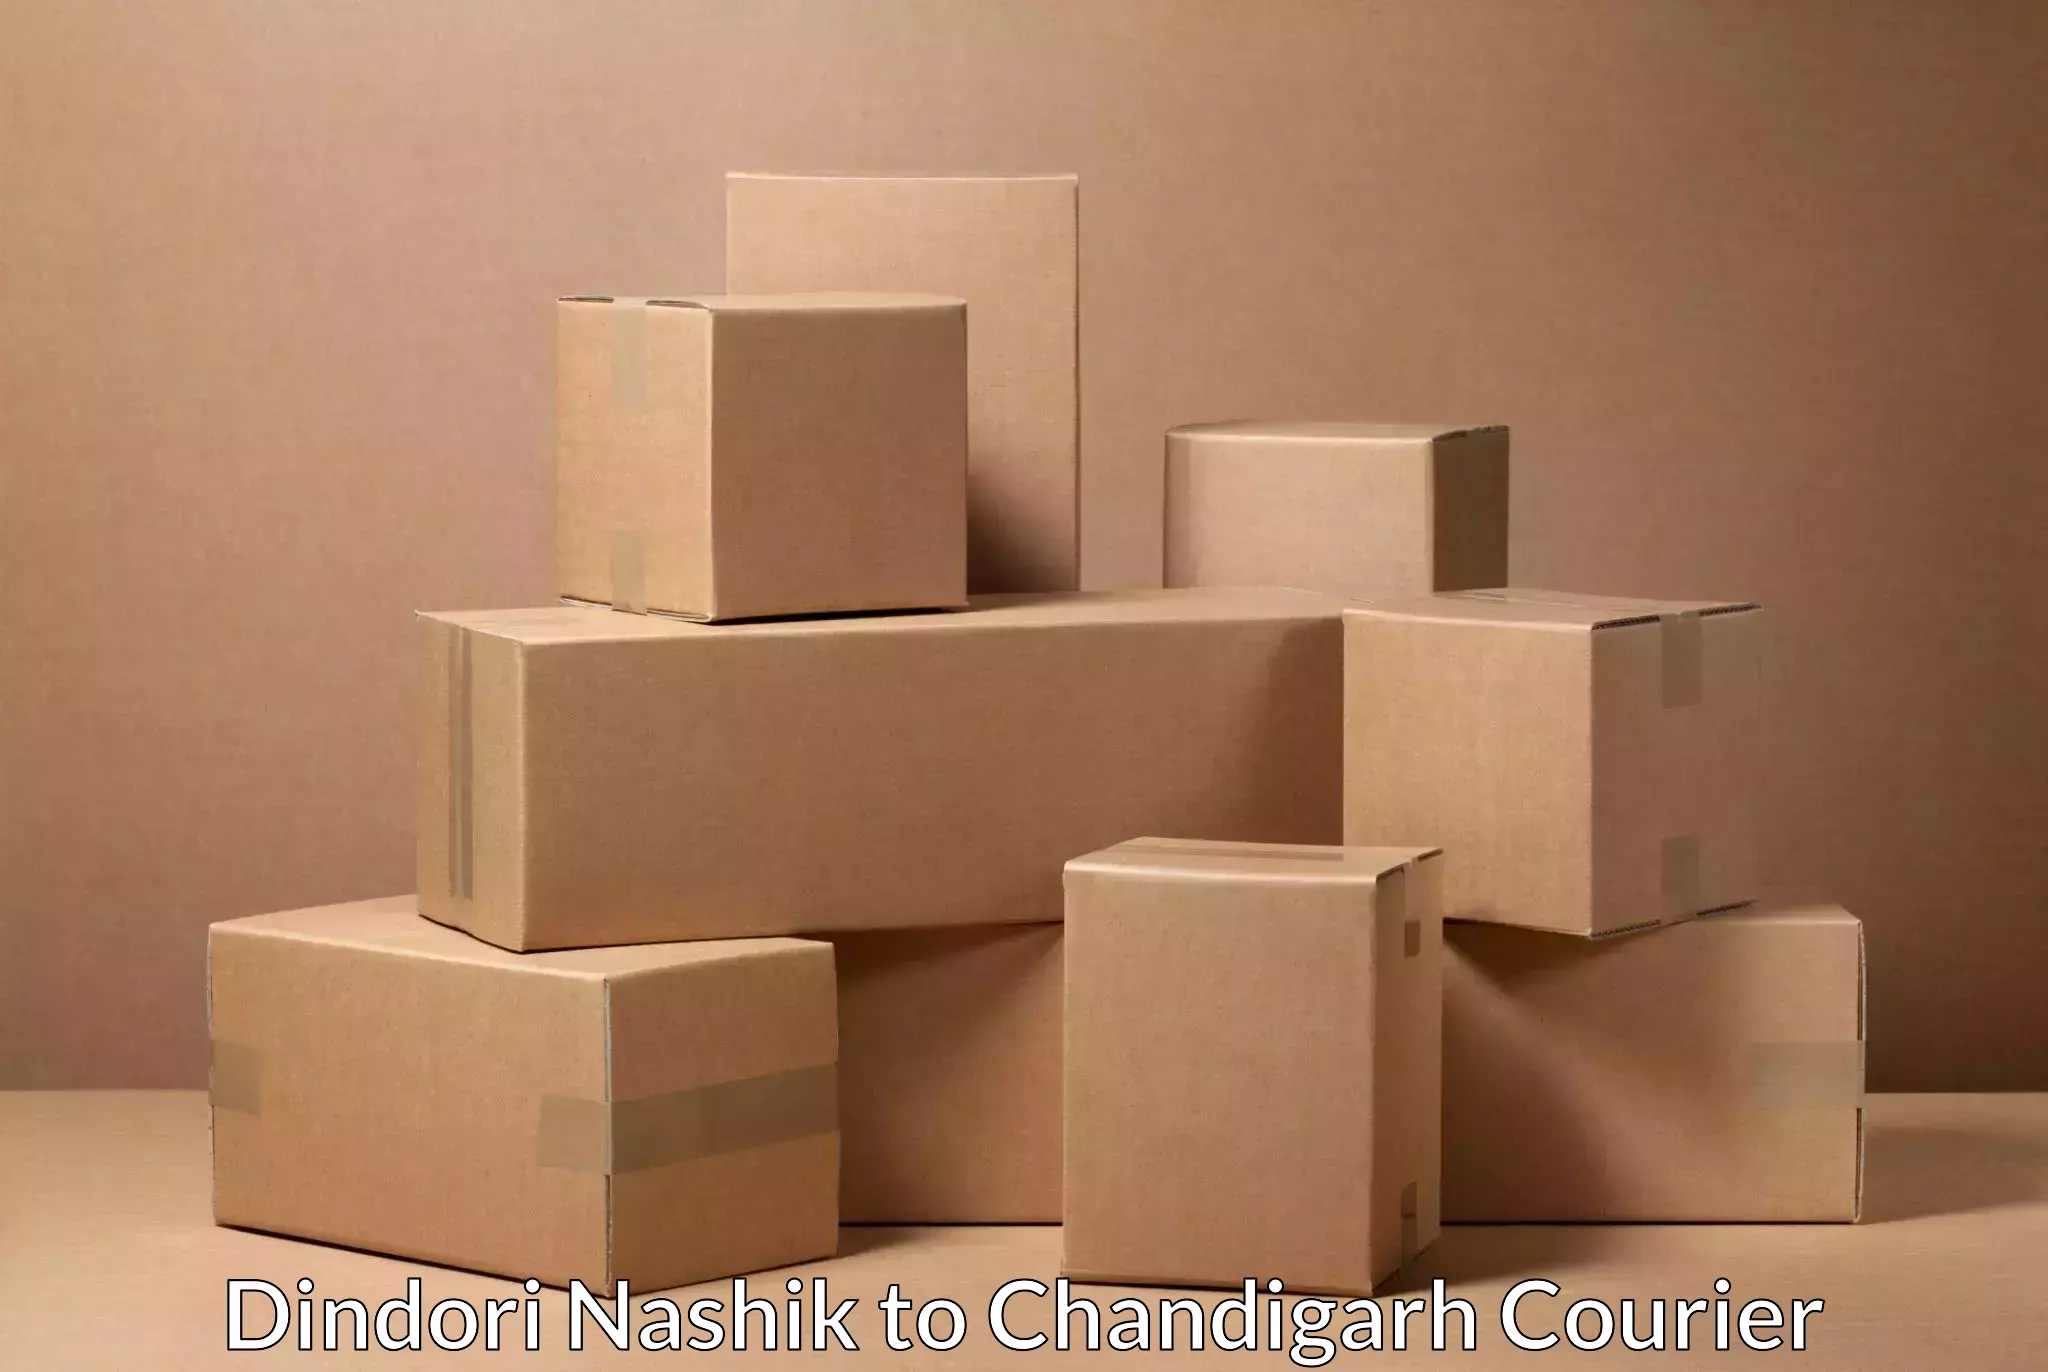 Nationwide shipping coverage Dindori Nashik to Chandigarh